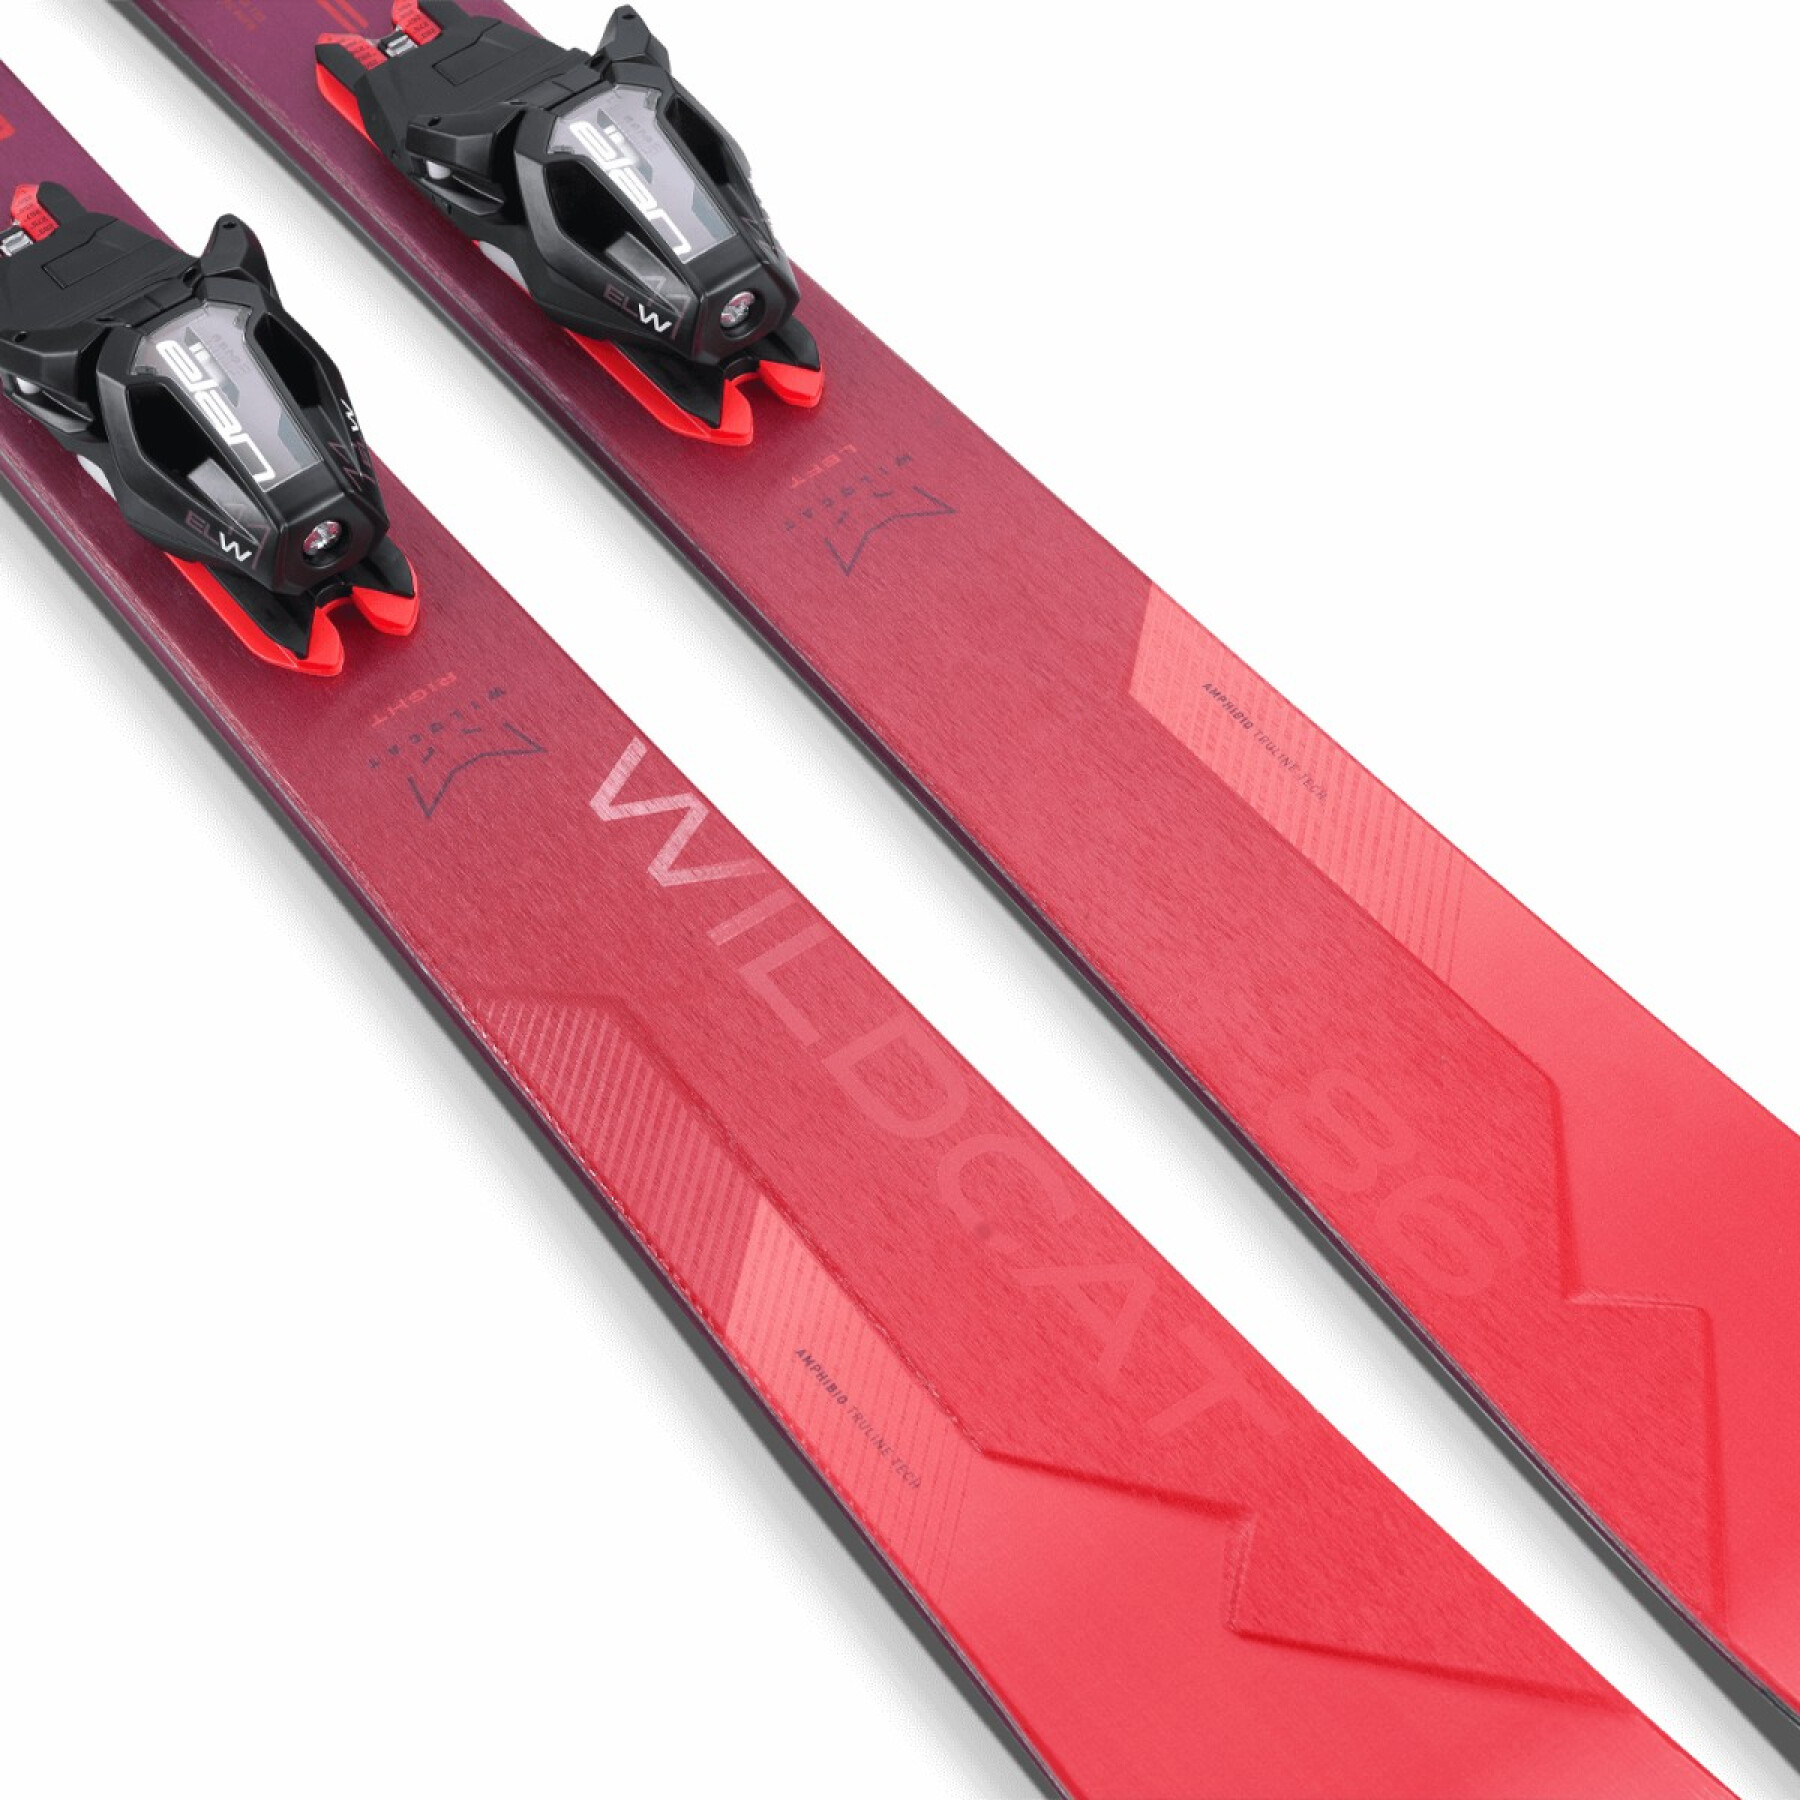 Wildcat 86 cx ps elw 11.0 ski pack with bindings Elan